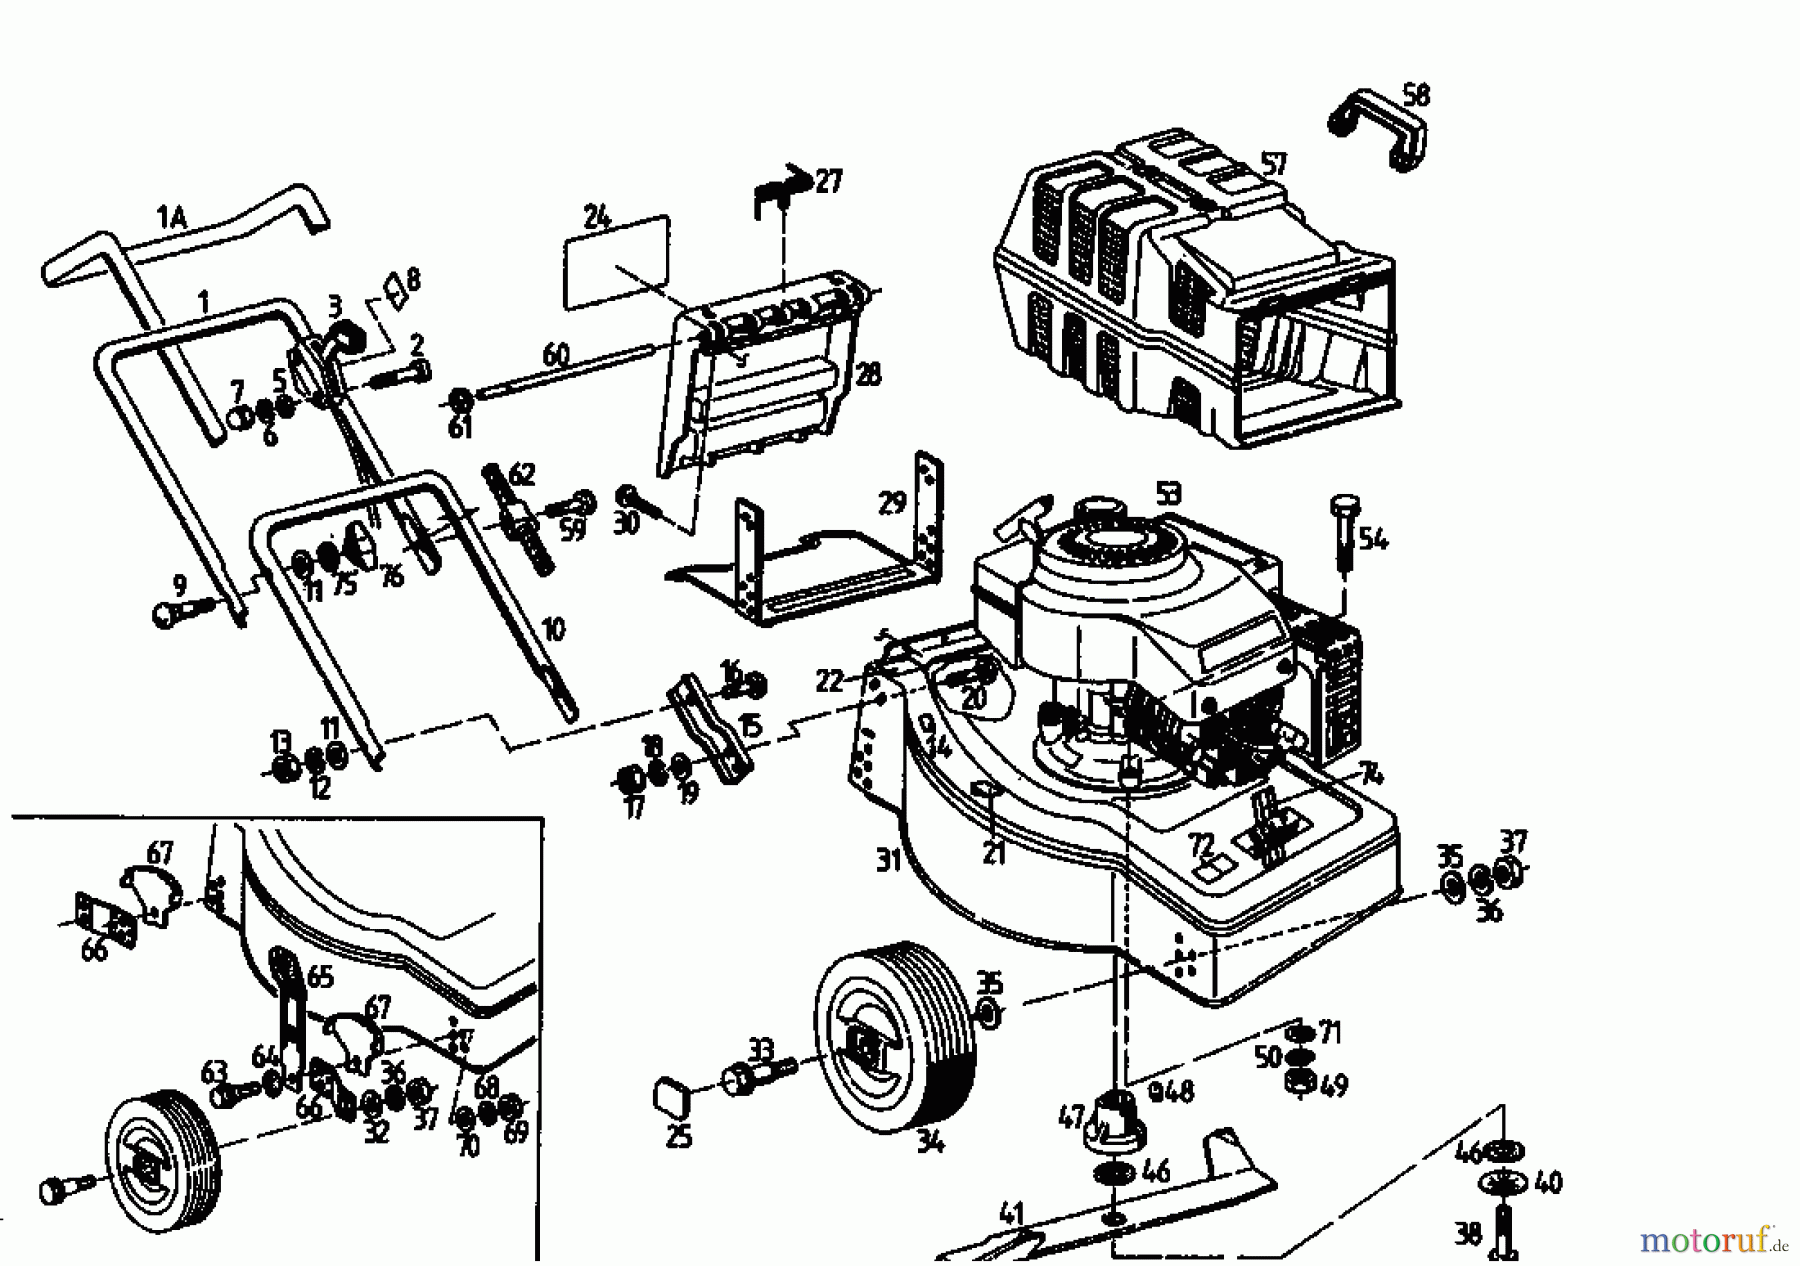  Golf Petrol mower Golf B 02813.04  (1994) Basic machine